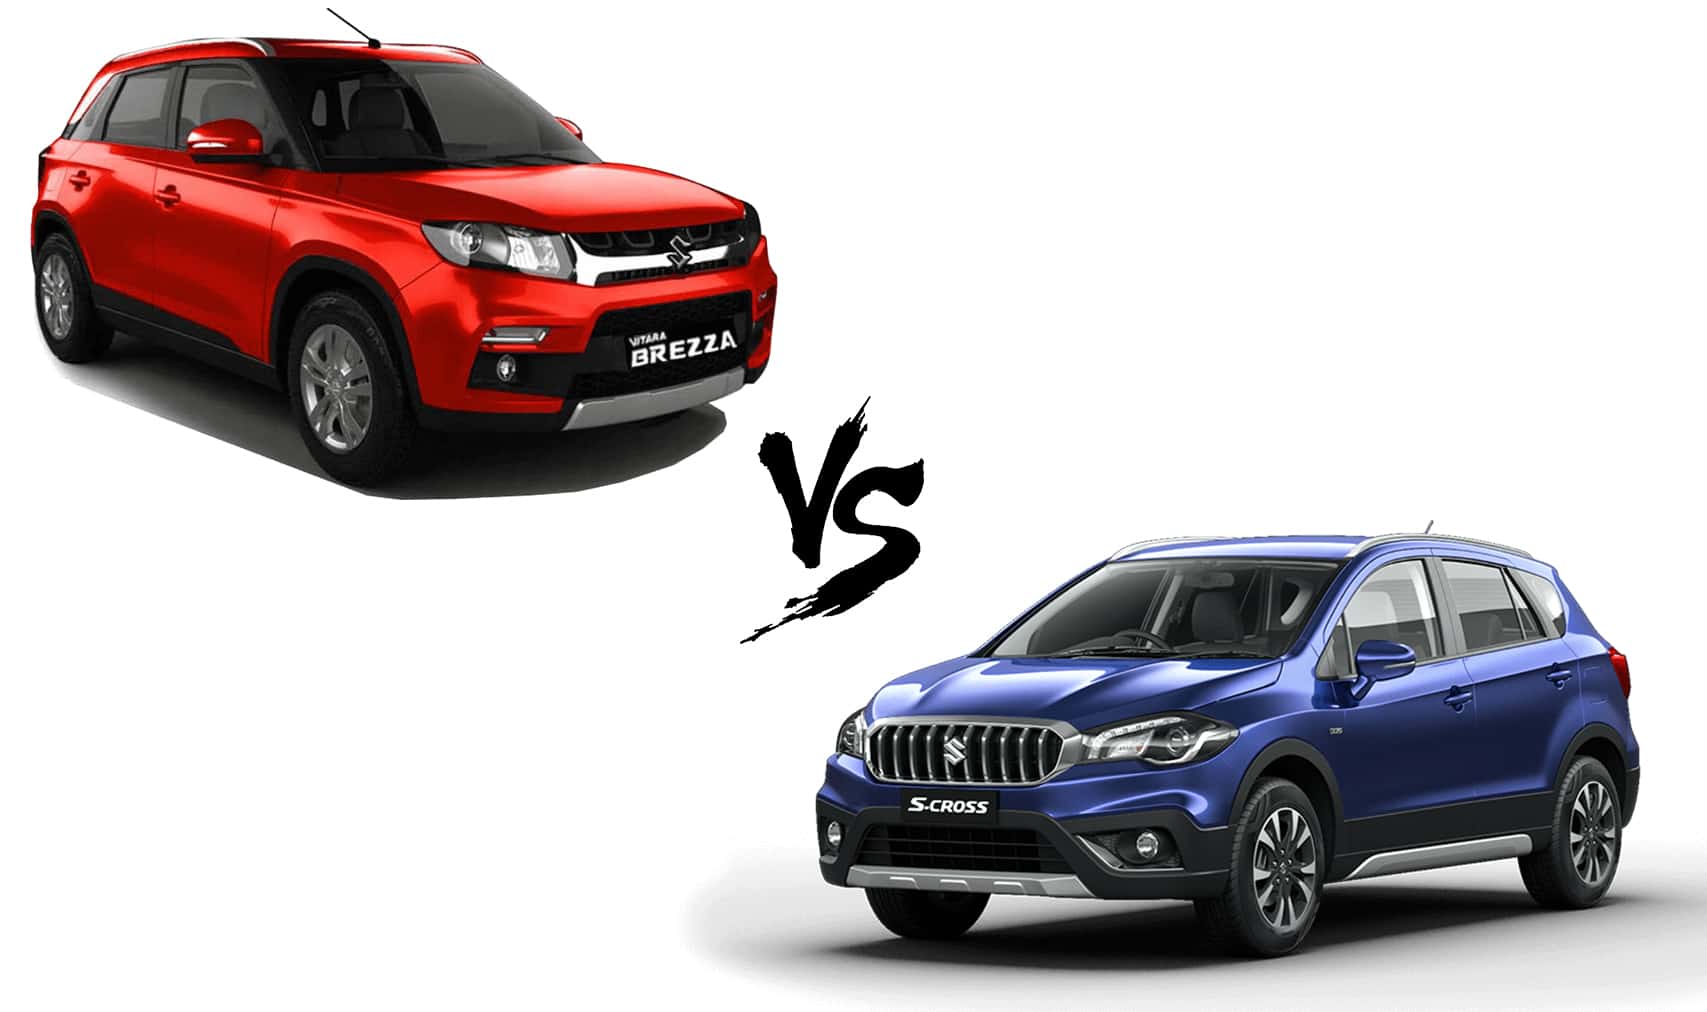 Maruti Suzuki Vitara Brezza vs S Cross: Which is Better?